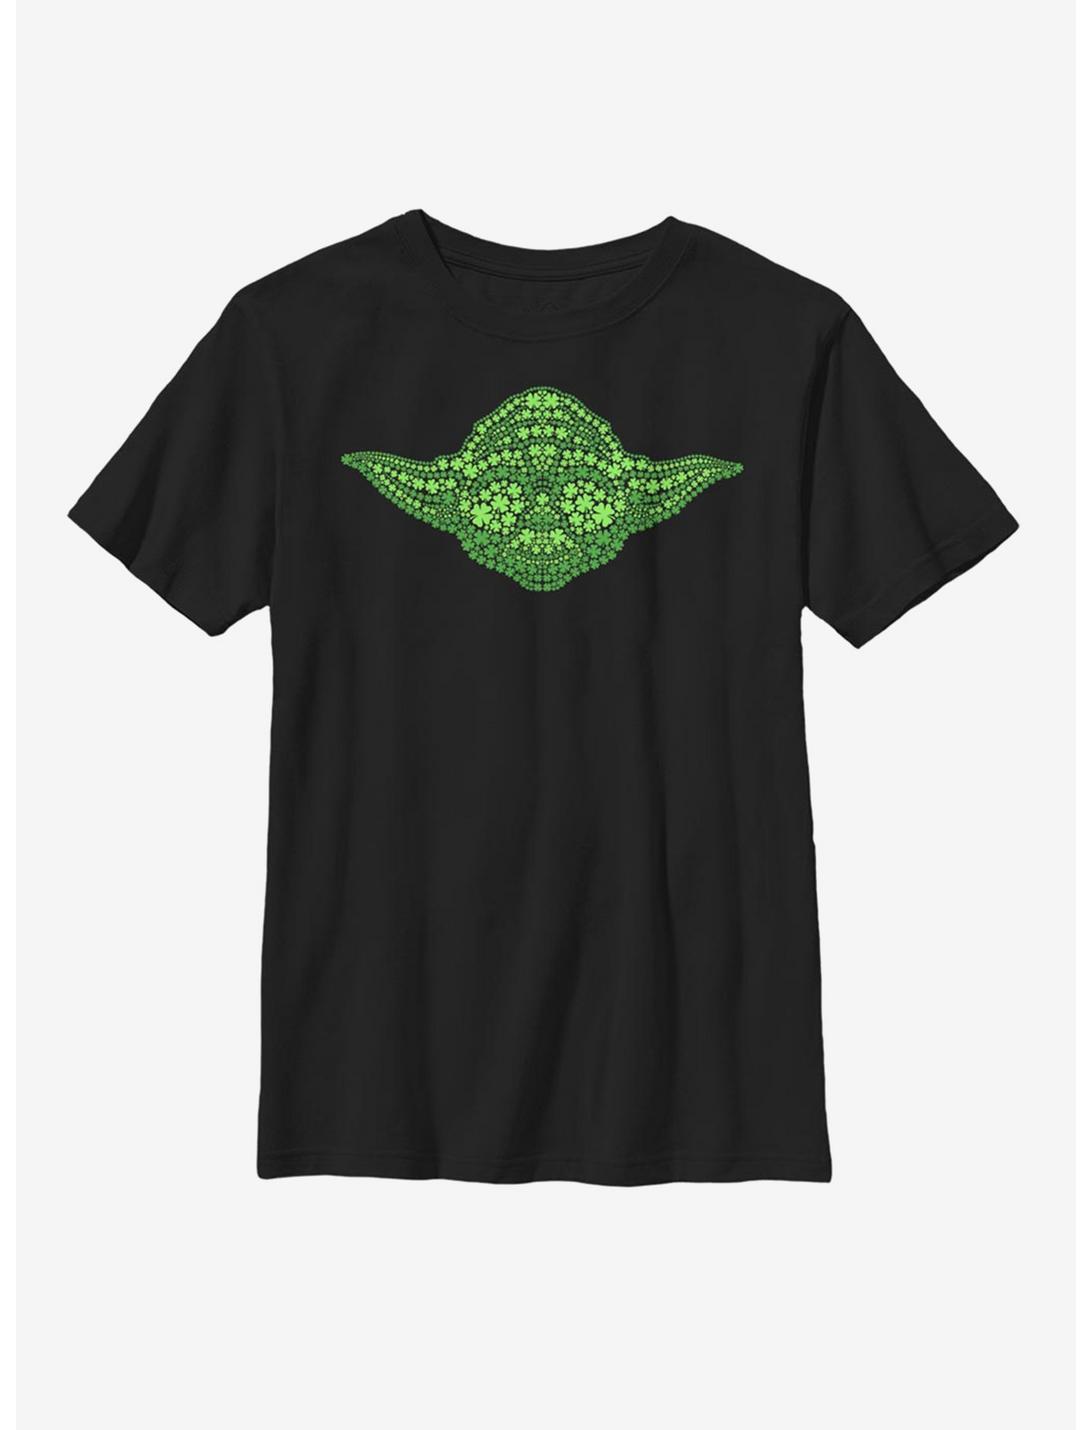 Star Wars Yoda Clovers Youth T-Shirt, BLACK, hi-res